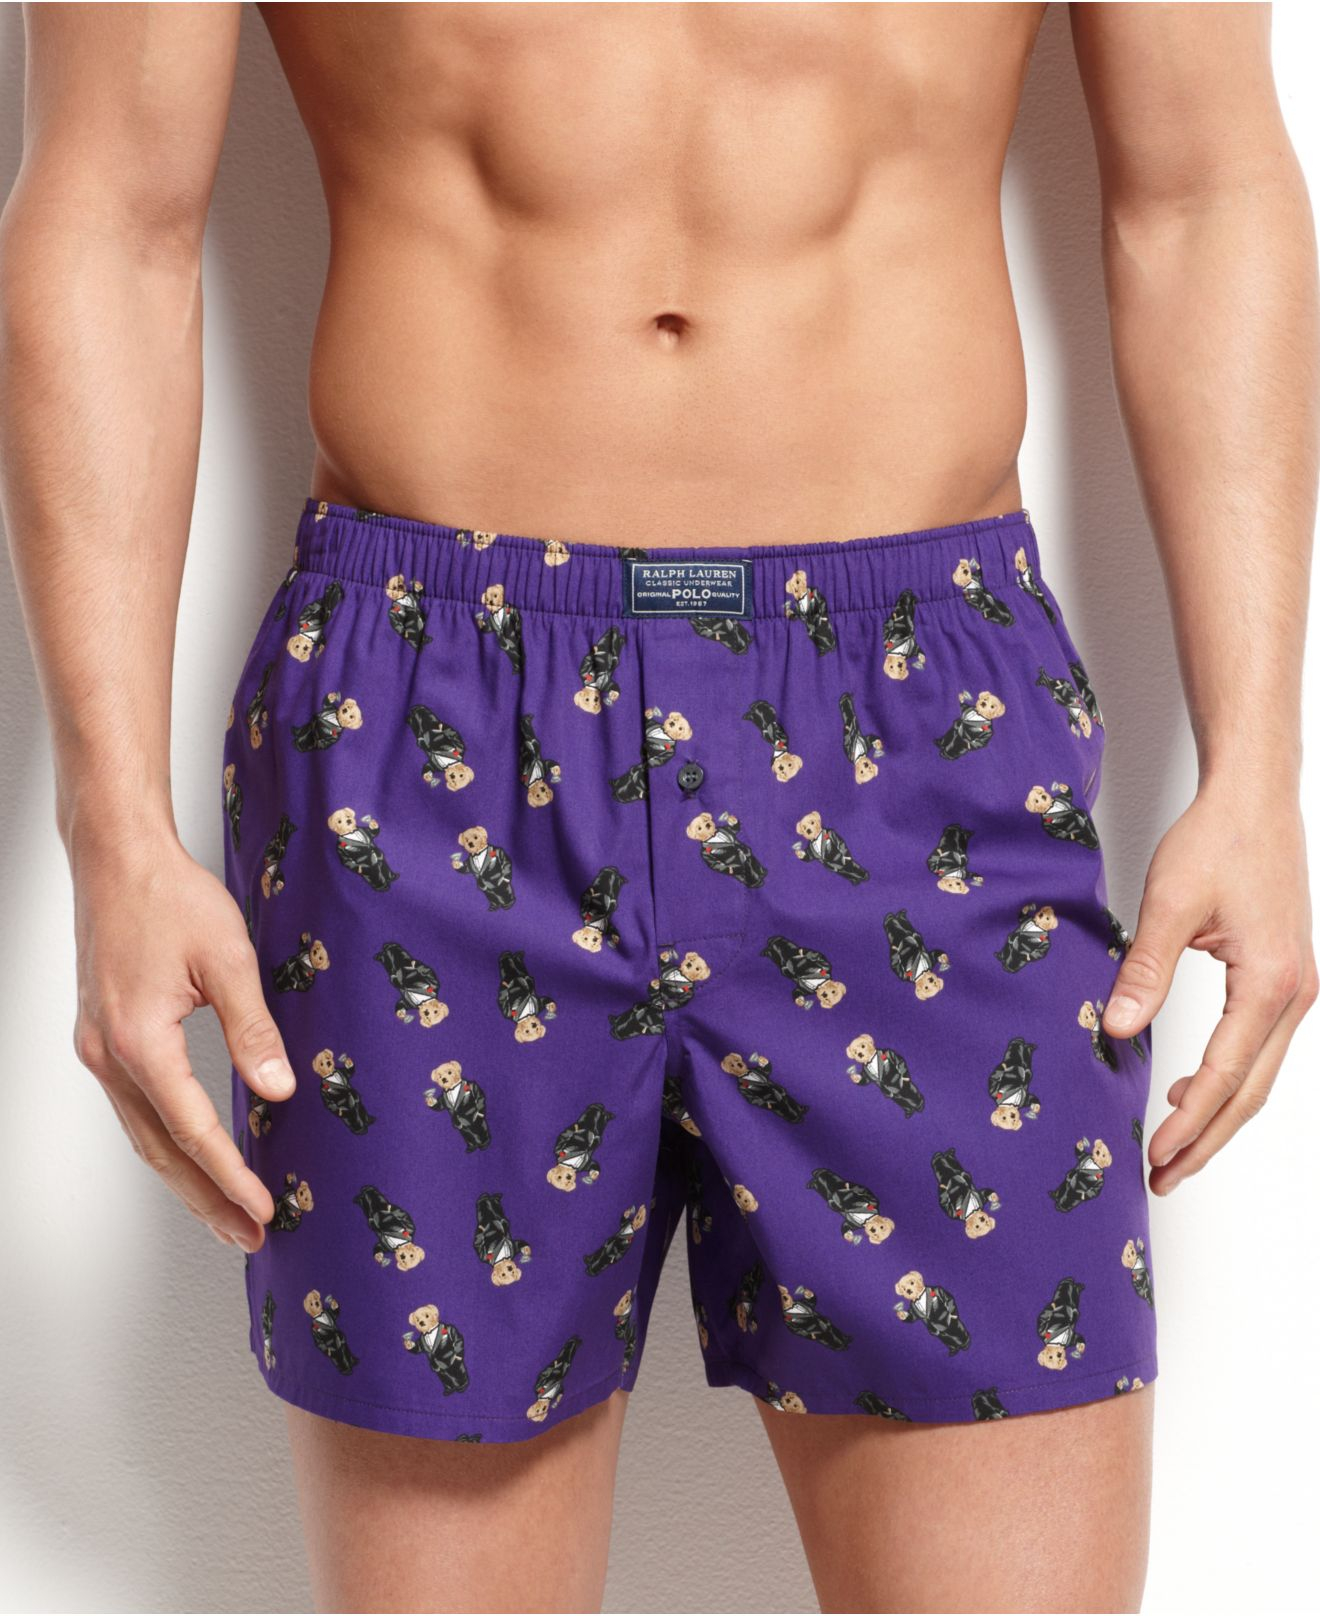 Lyst - Polo Ralph Lauren Men'S Bear Print Woven Boxers in Purple for Men